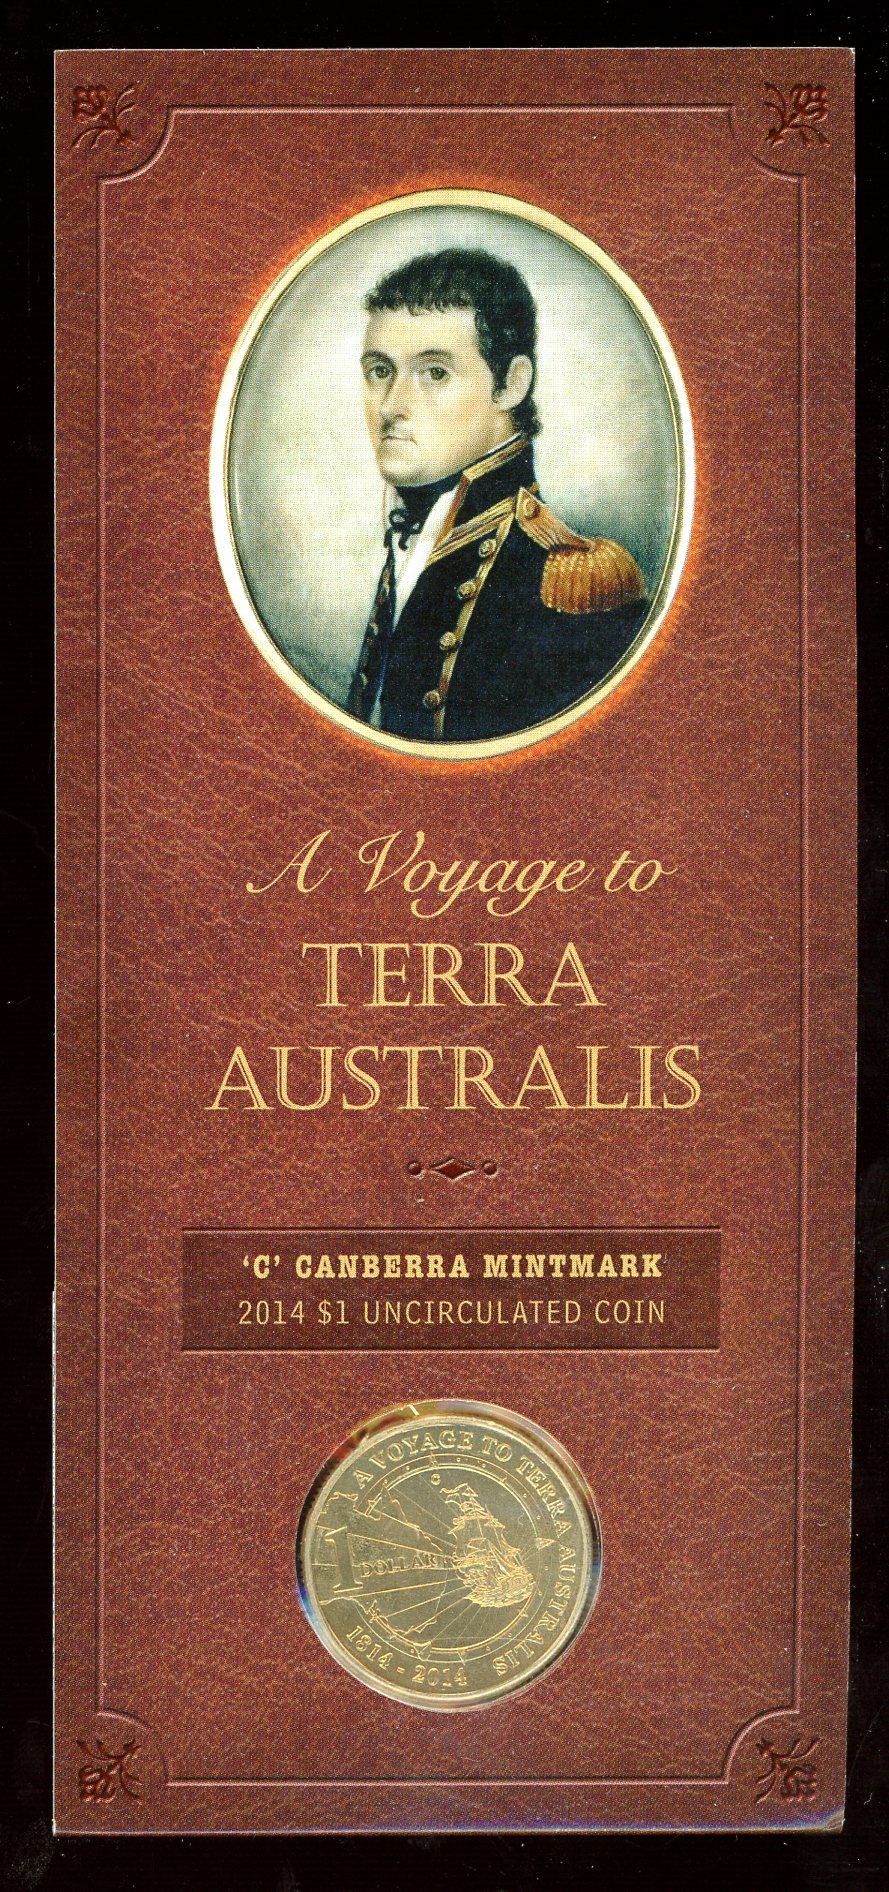 Thumbnail for 2014 Terra Australis Canberra Mintmark $1.00 on Card